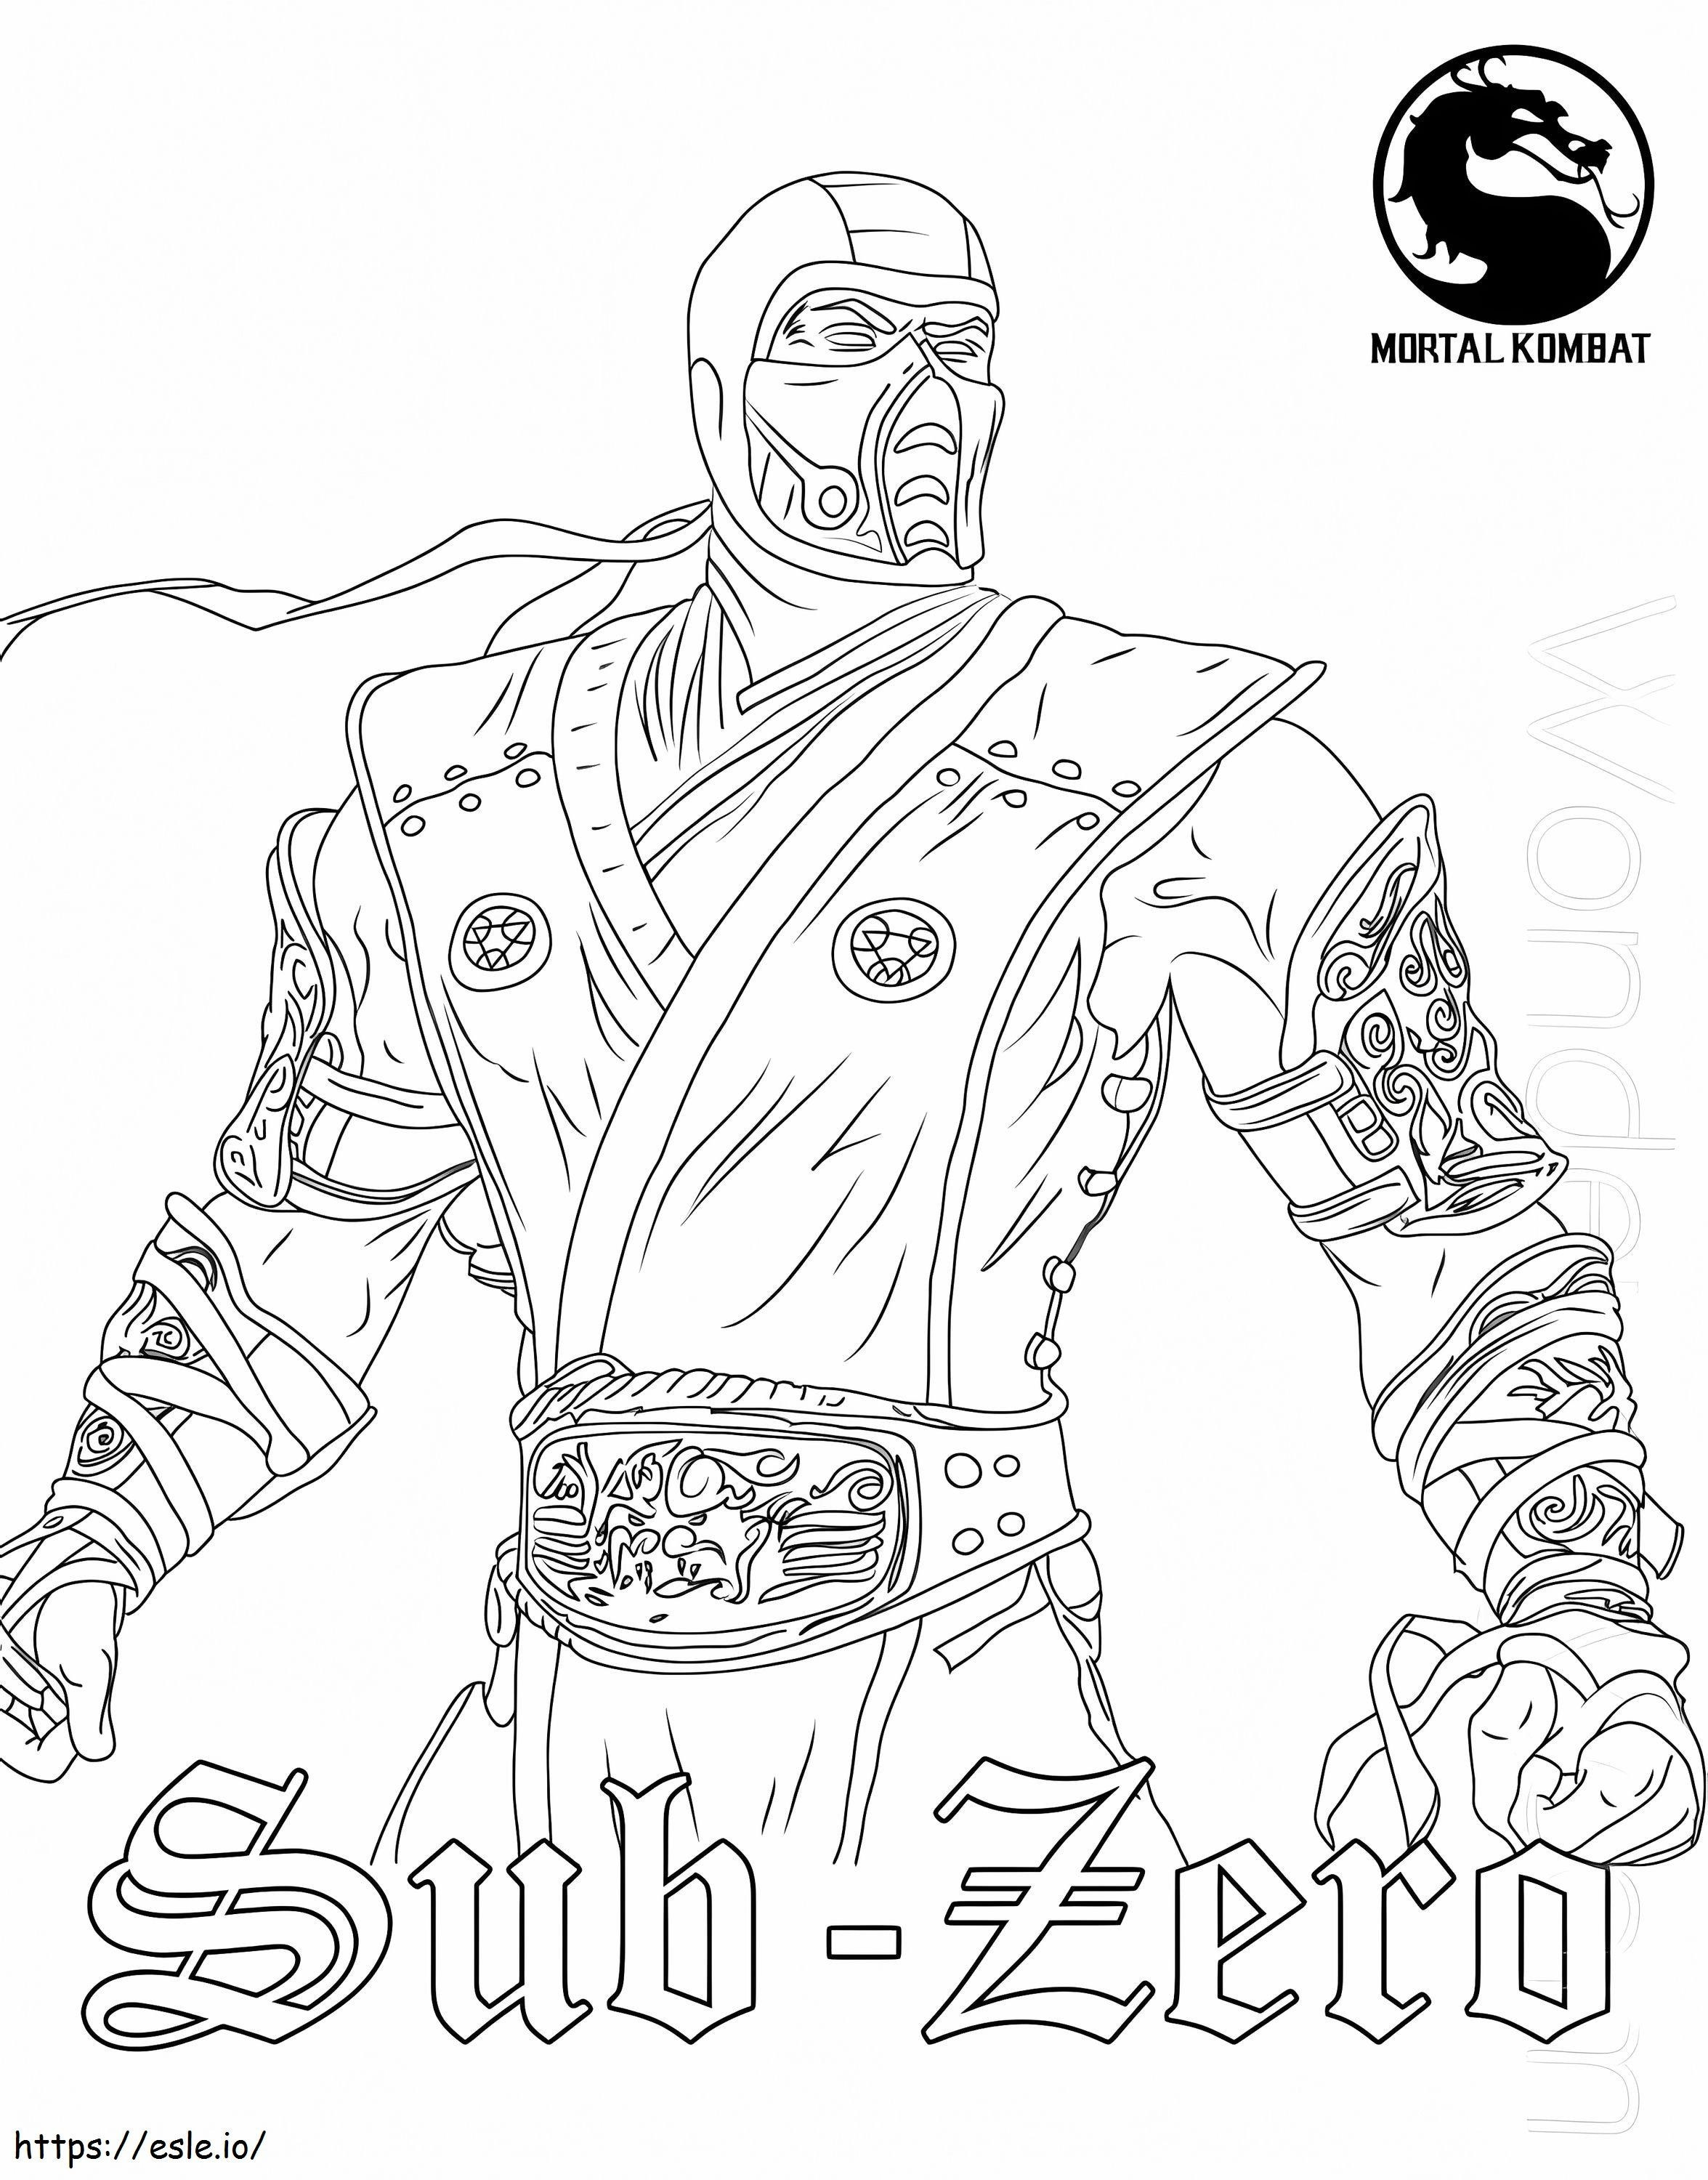 Mortal Kombat Sub Zero coloring page